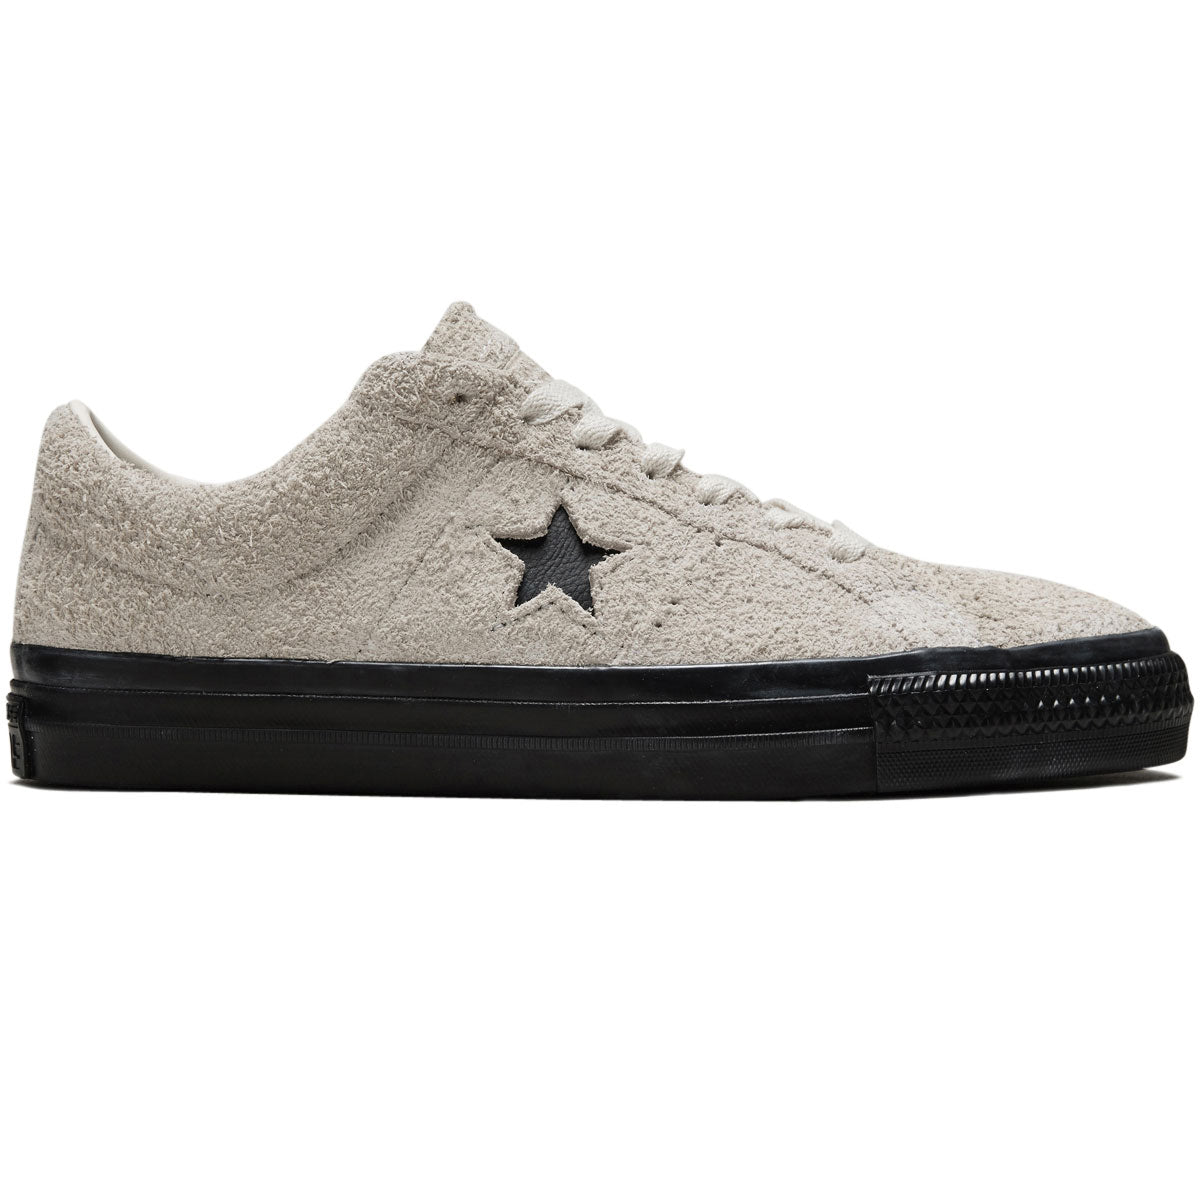 Converse One Star Pro Shaggy Suede Shoes - Egret/Egret/Black – CCS